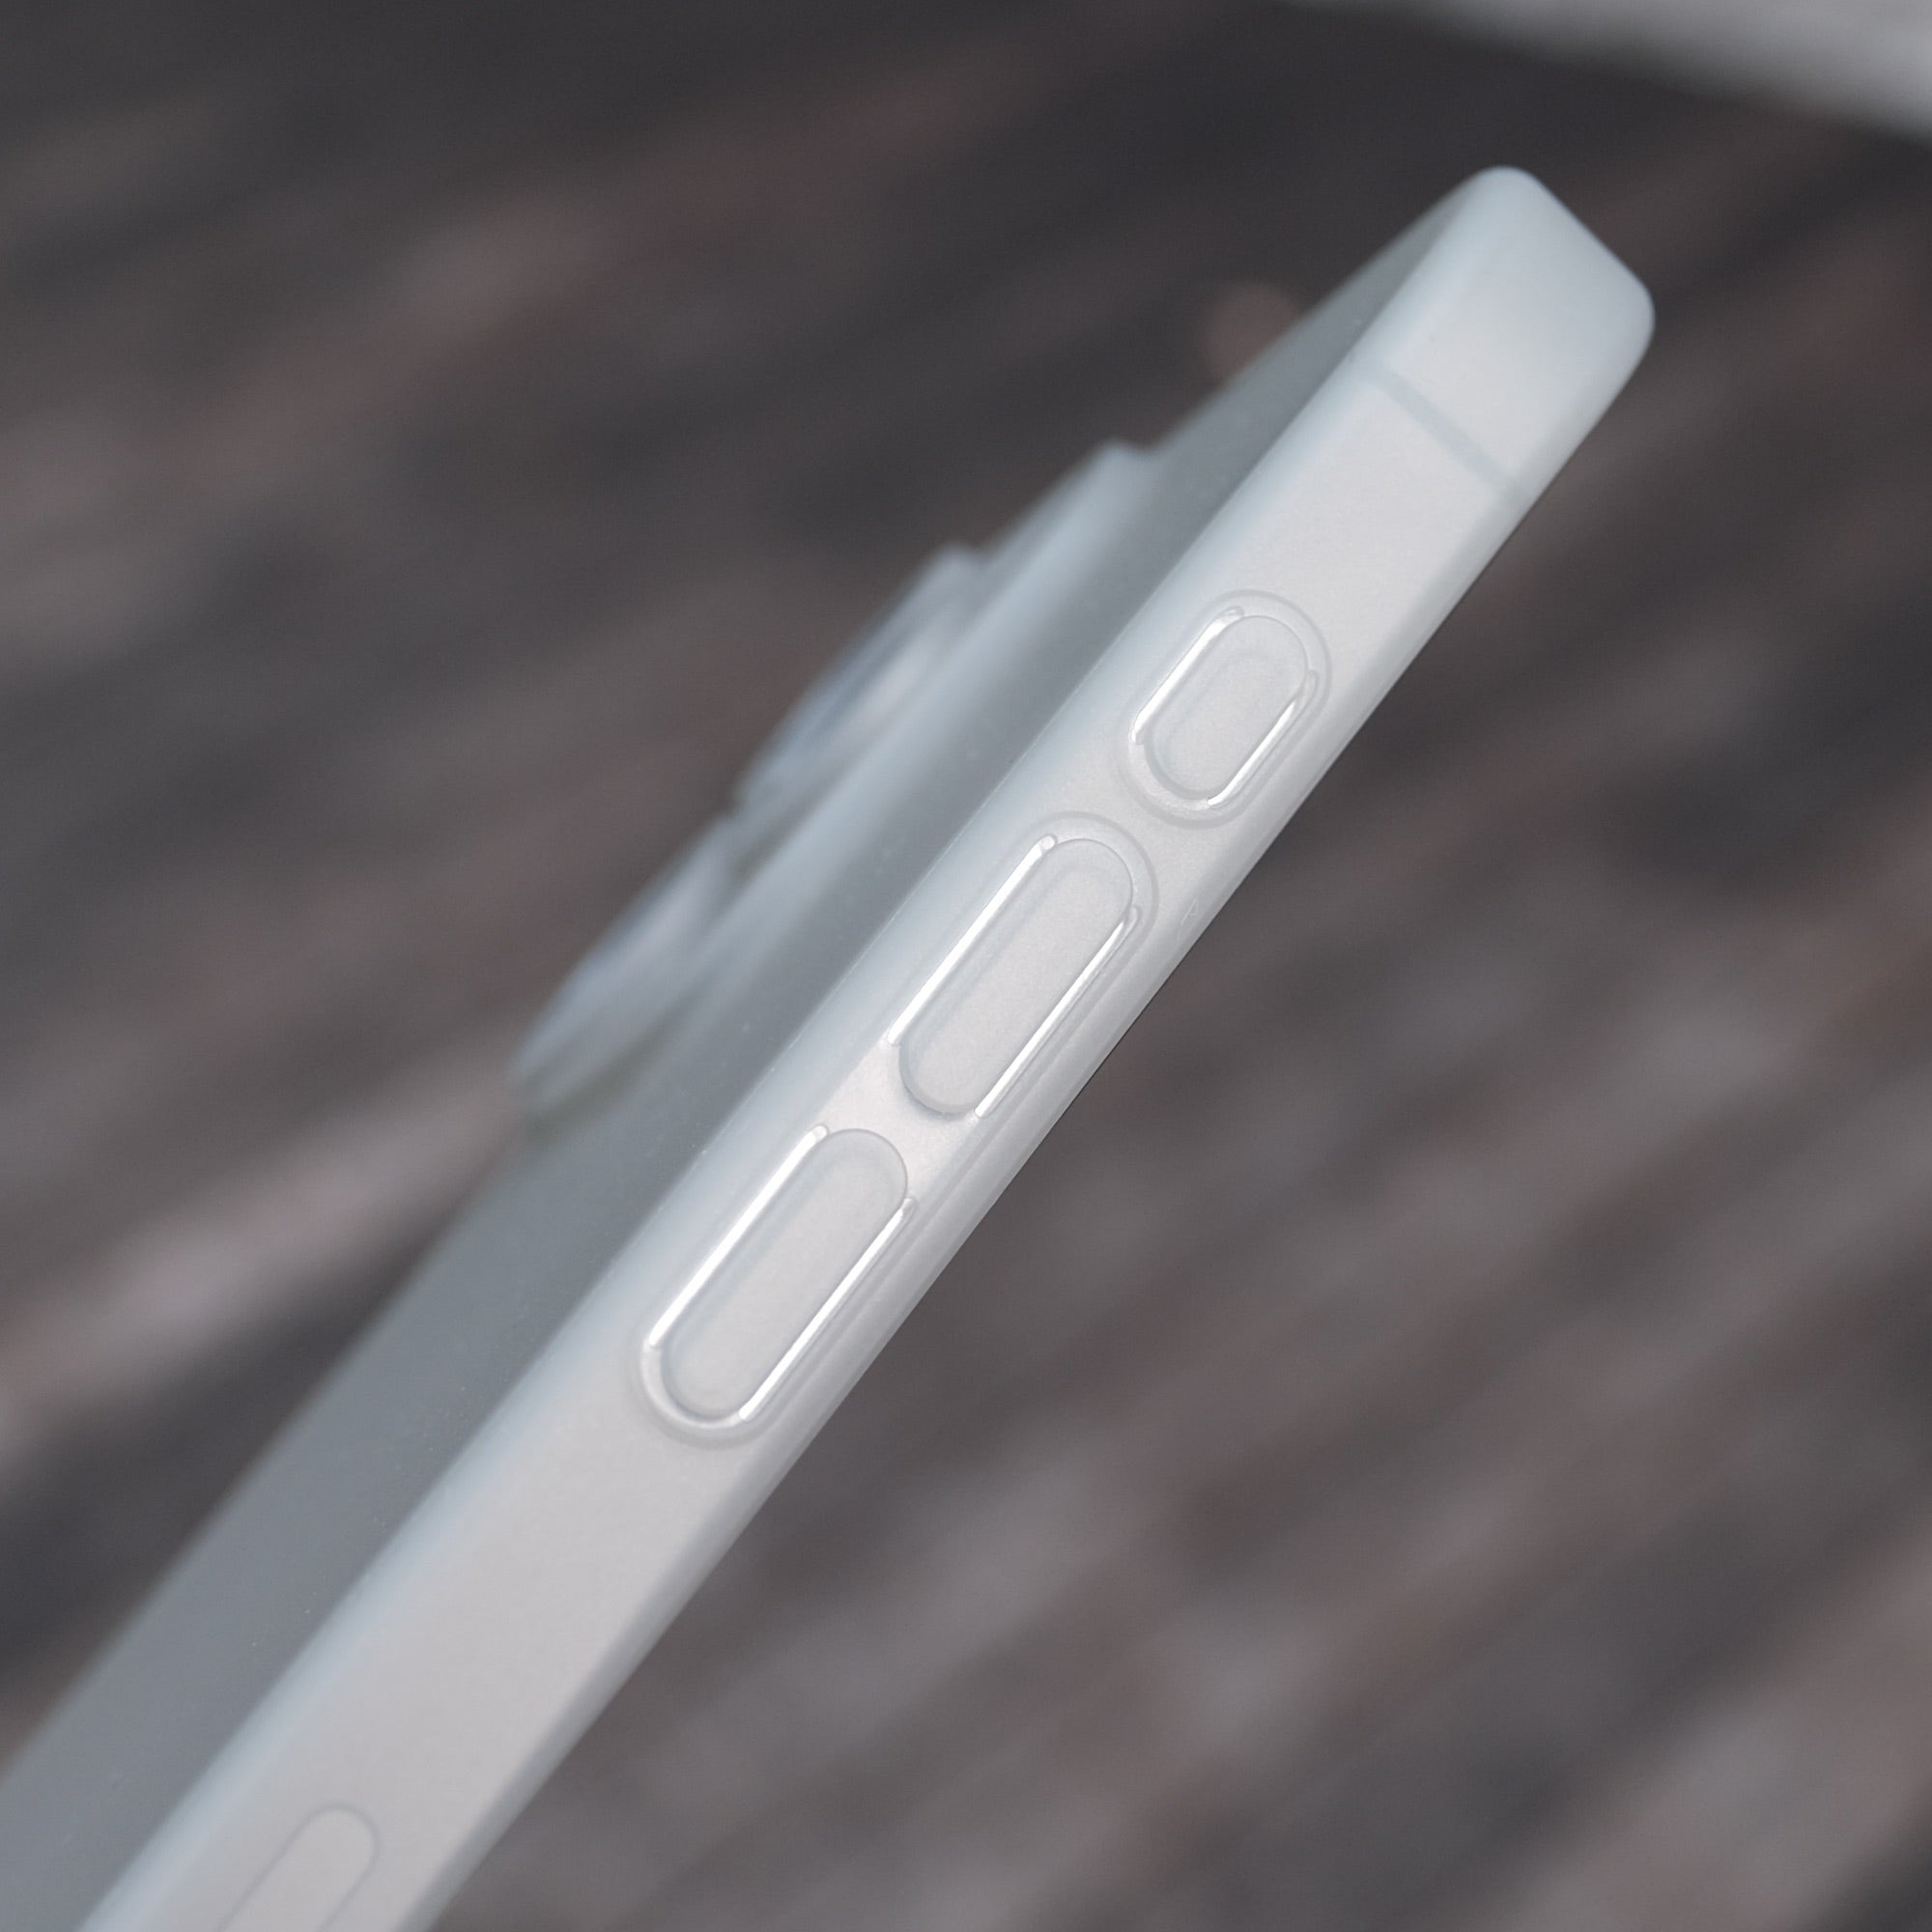 iPhone 15 Pro Max - Ultra Thin Case